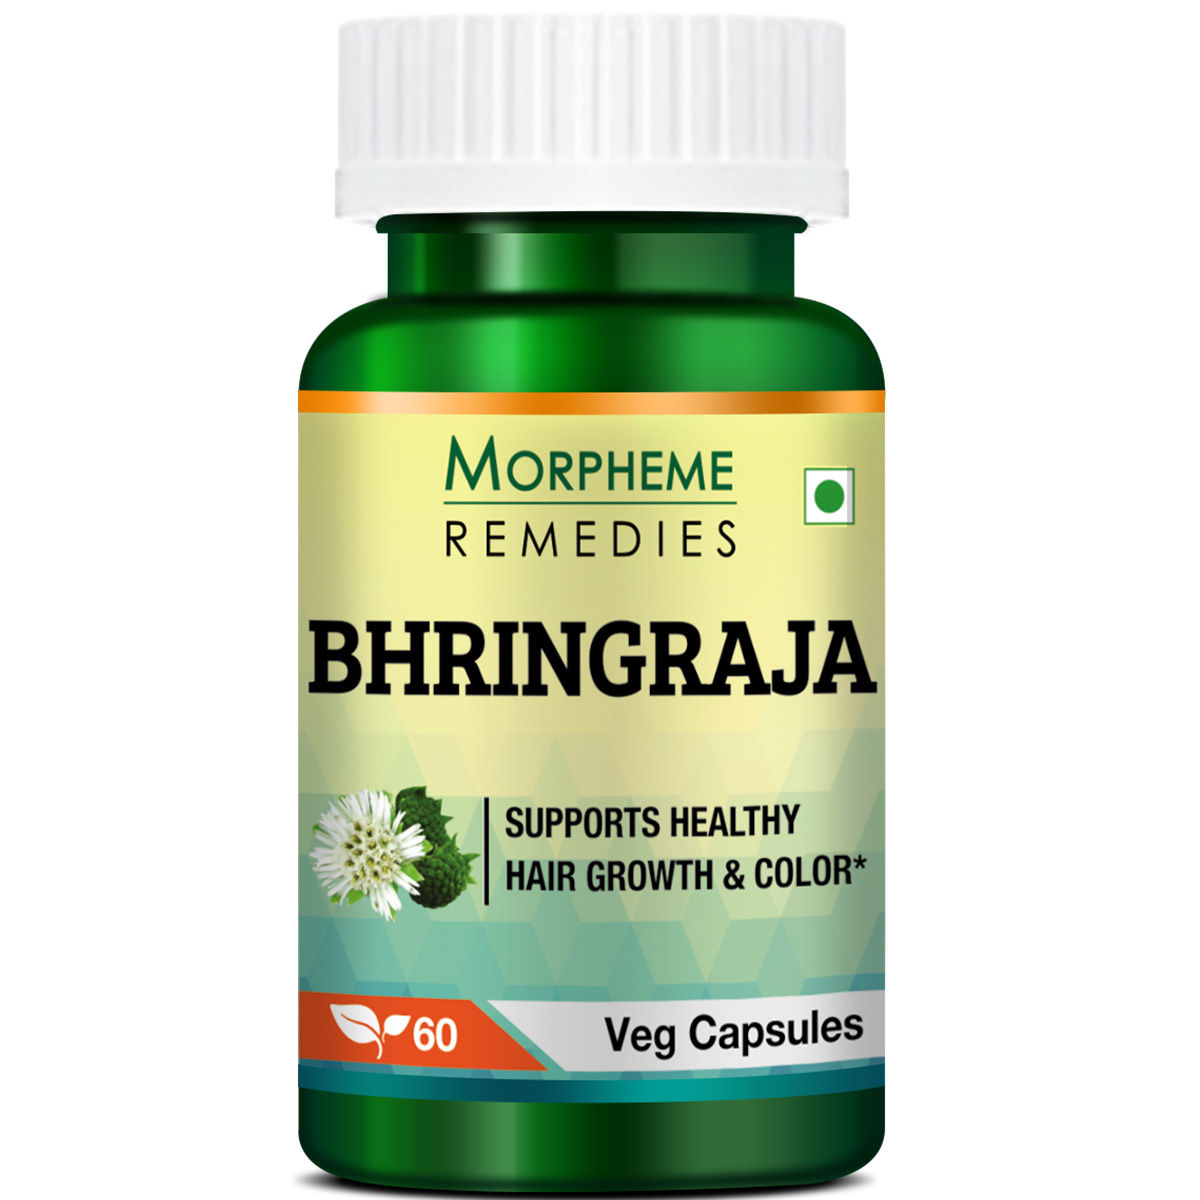 Morpheme Remedies Bhringraja